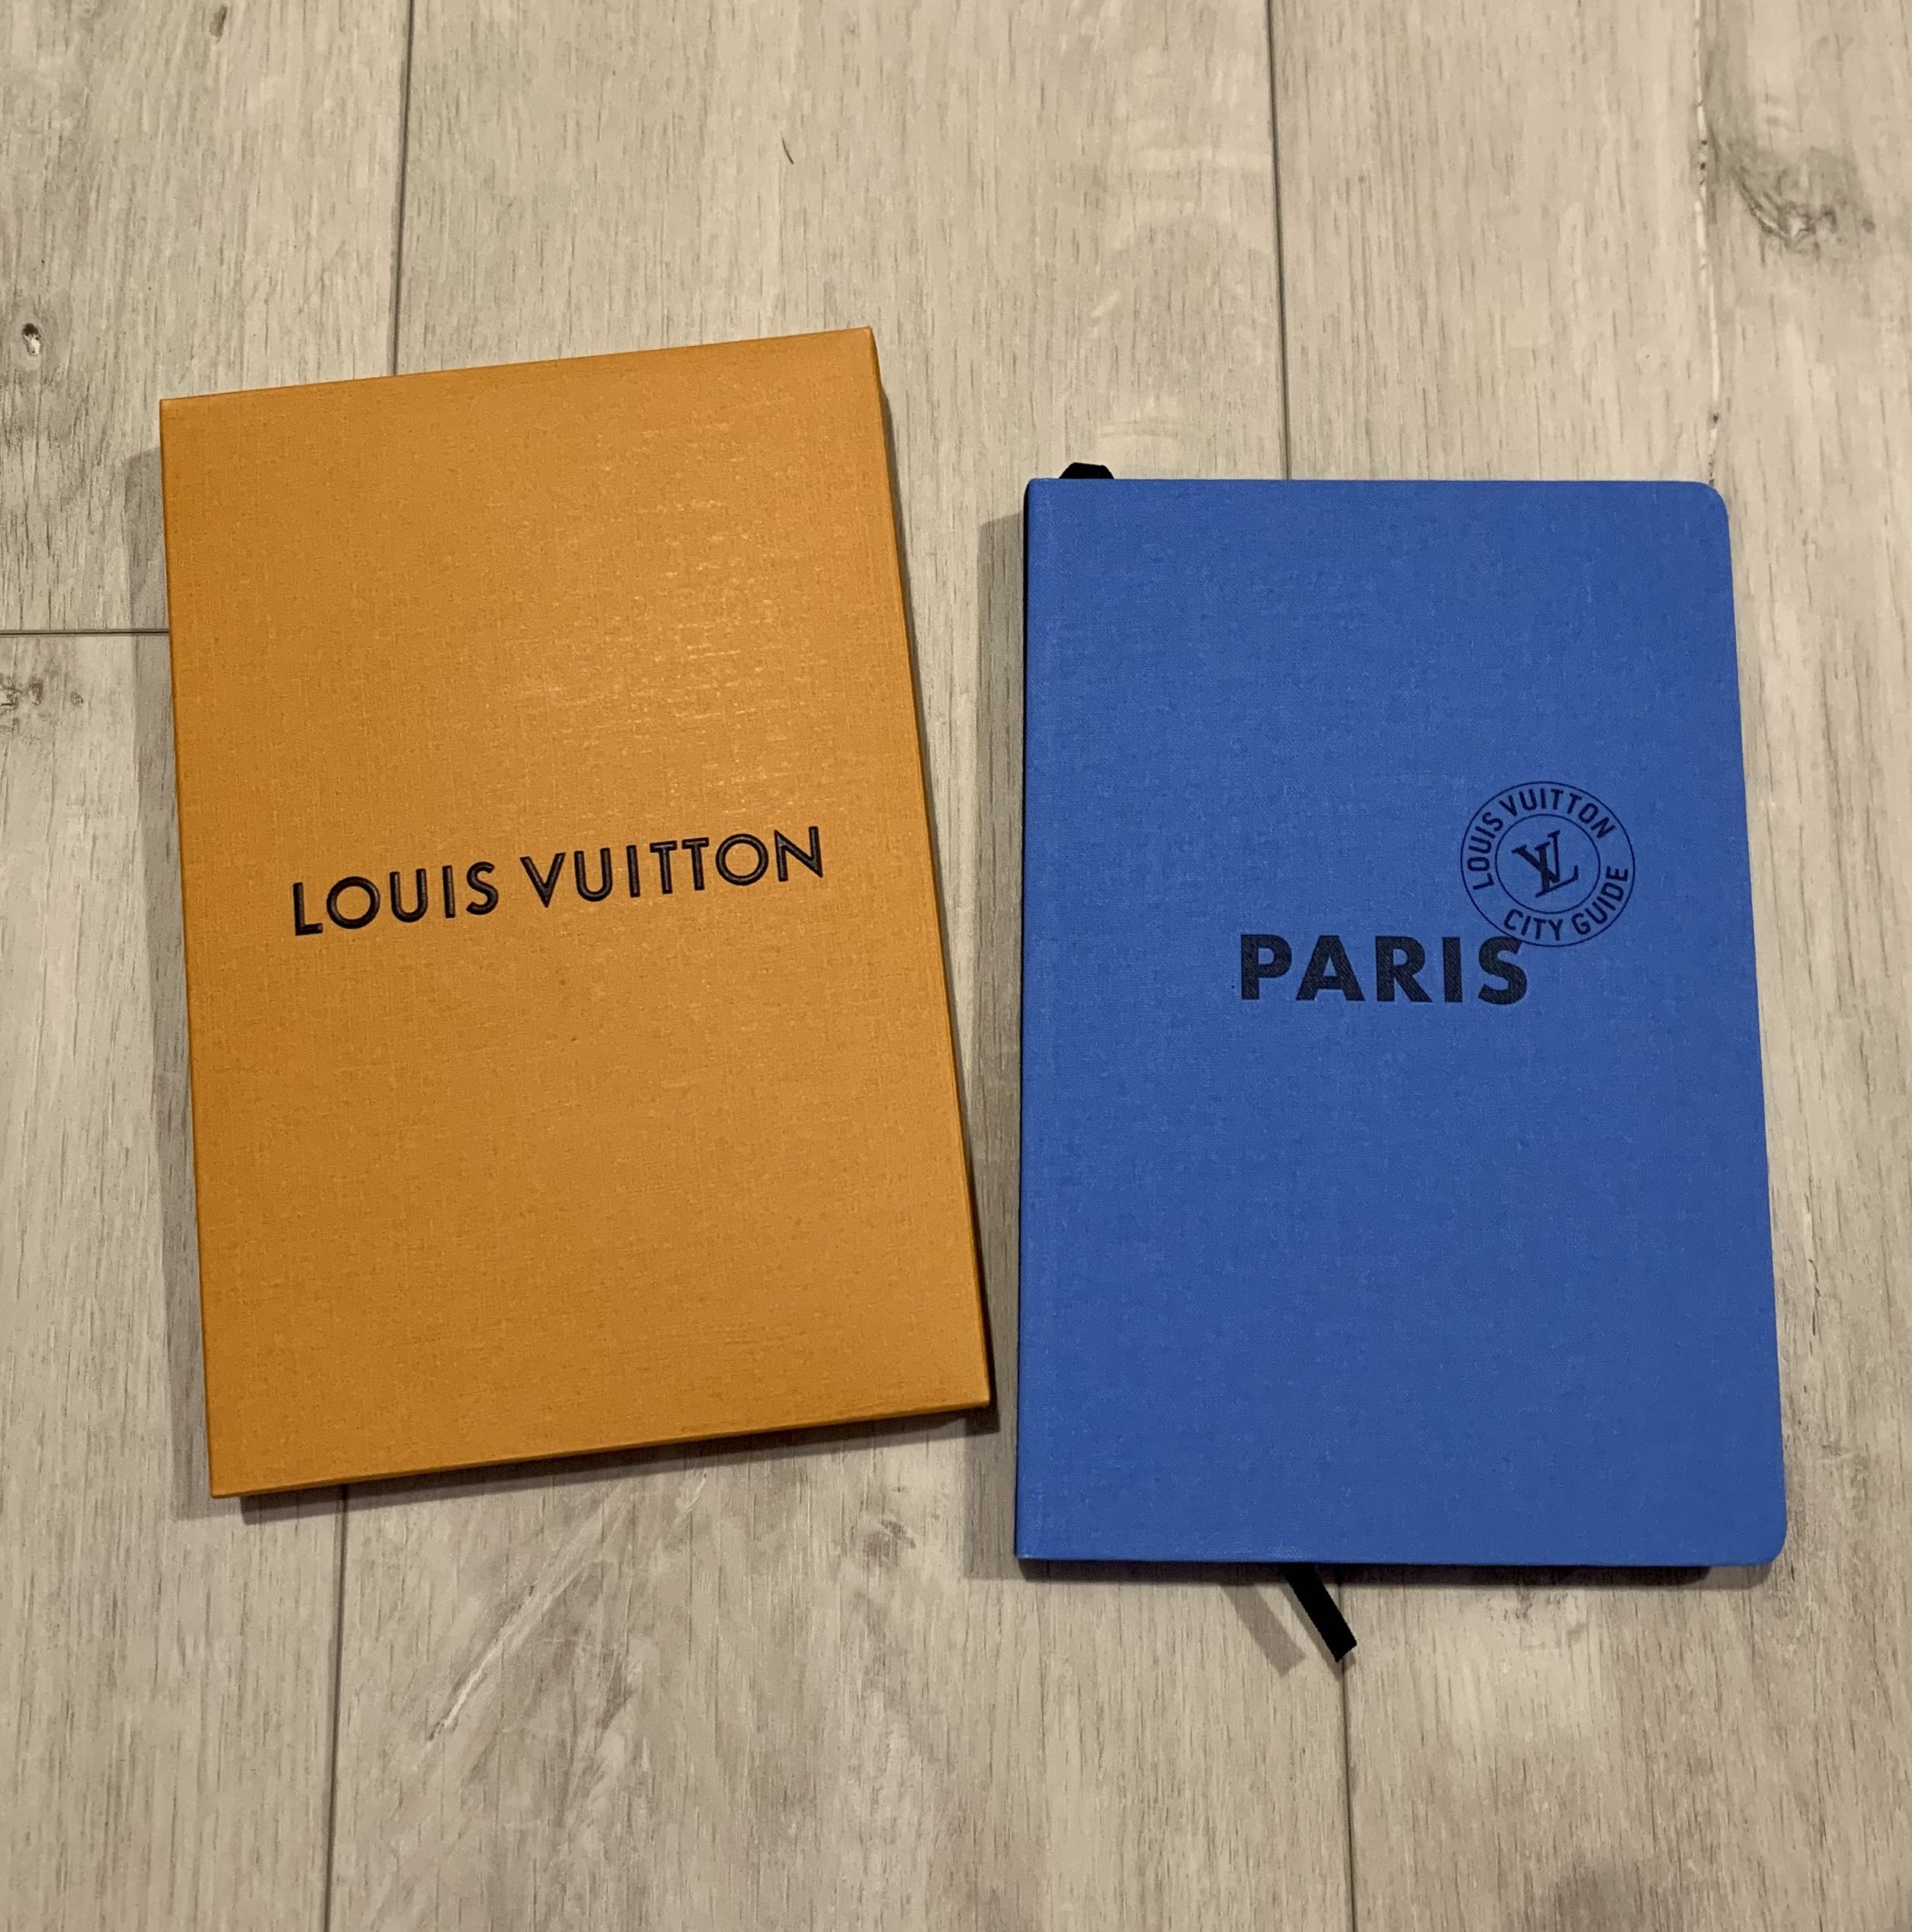 NEW Louis Vuitton City Guide Paris English version With Box